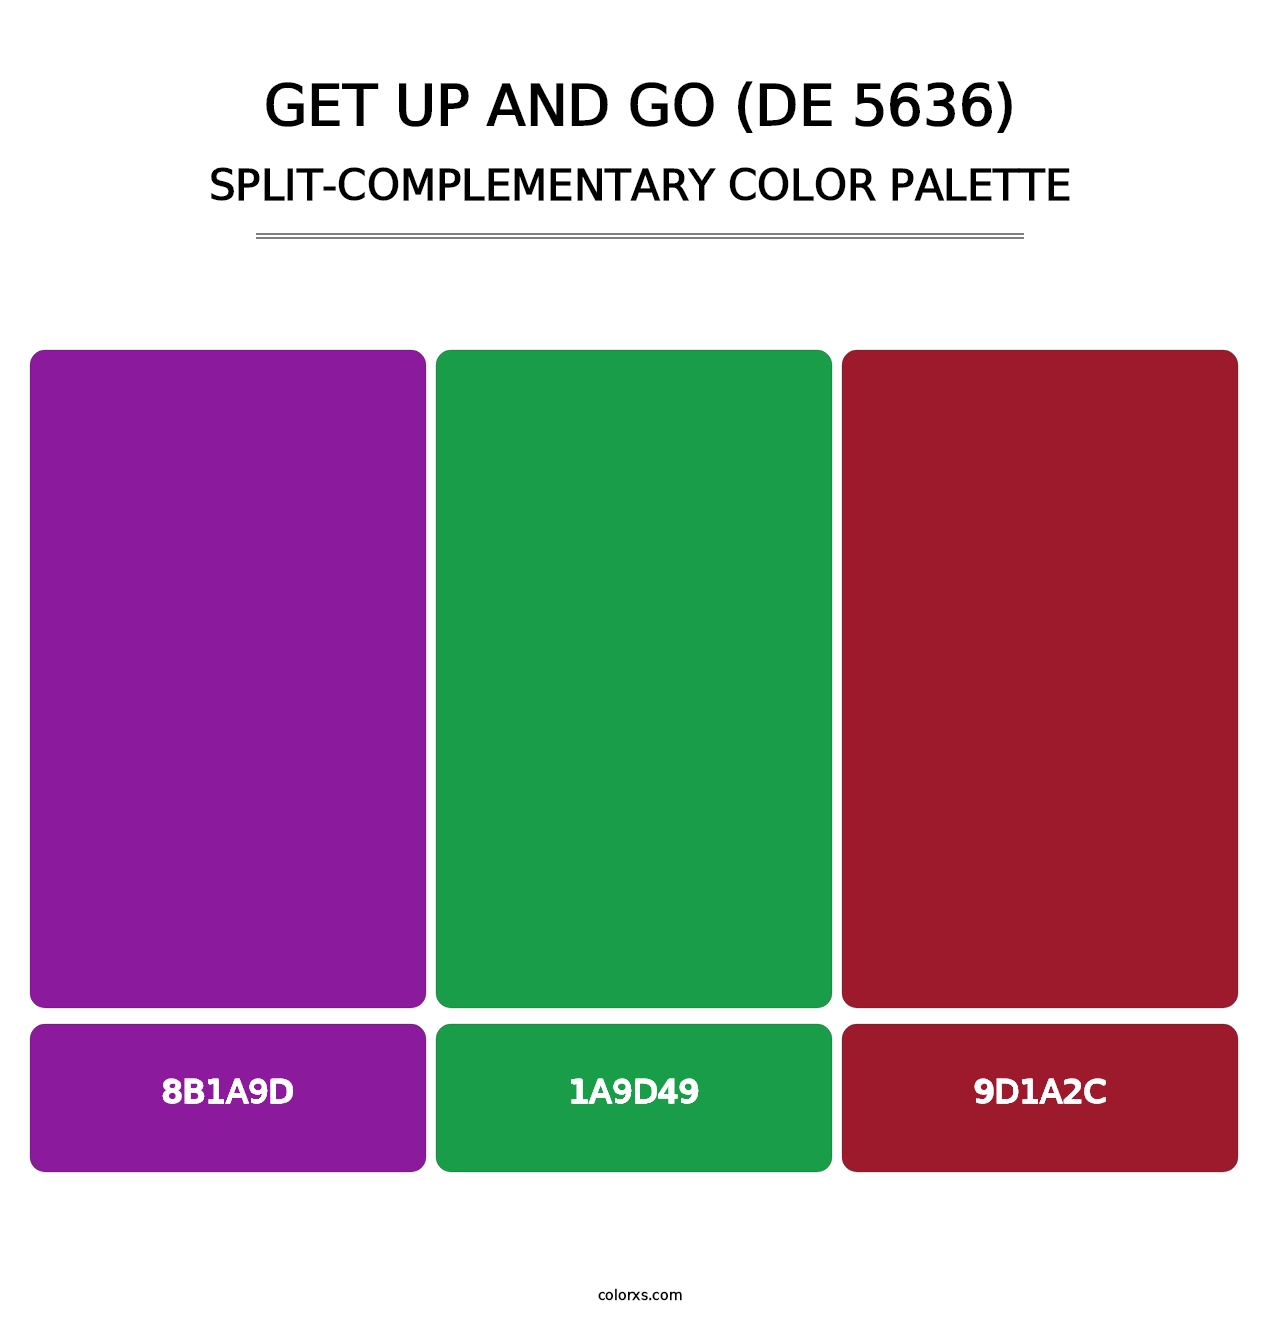 Get Up and Go (DE 5636) - Split-Complementary Color Palette